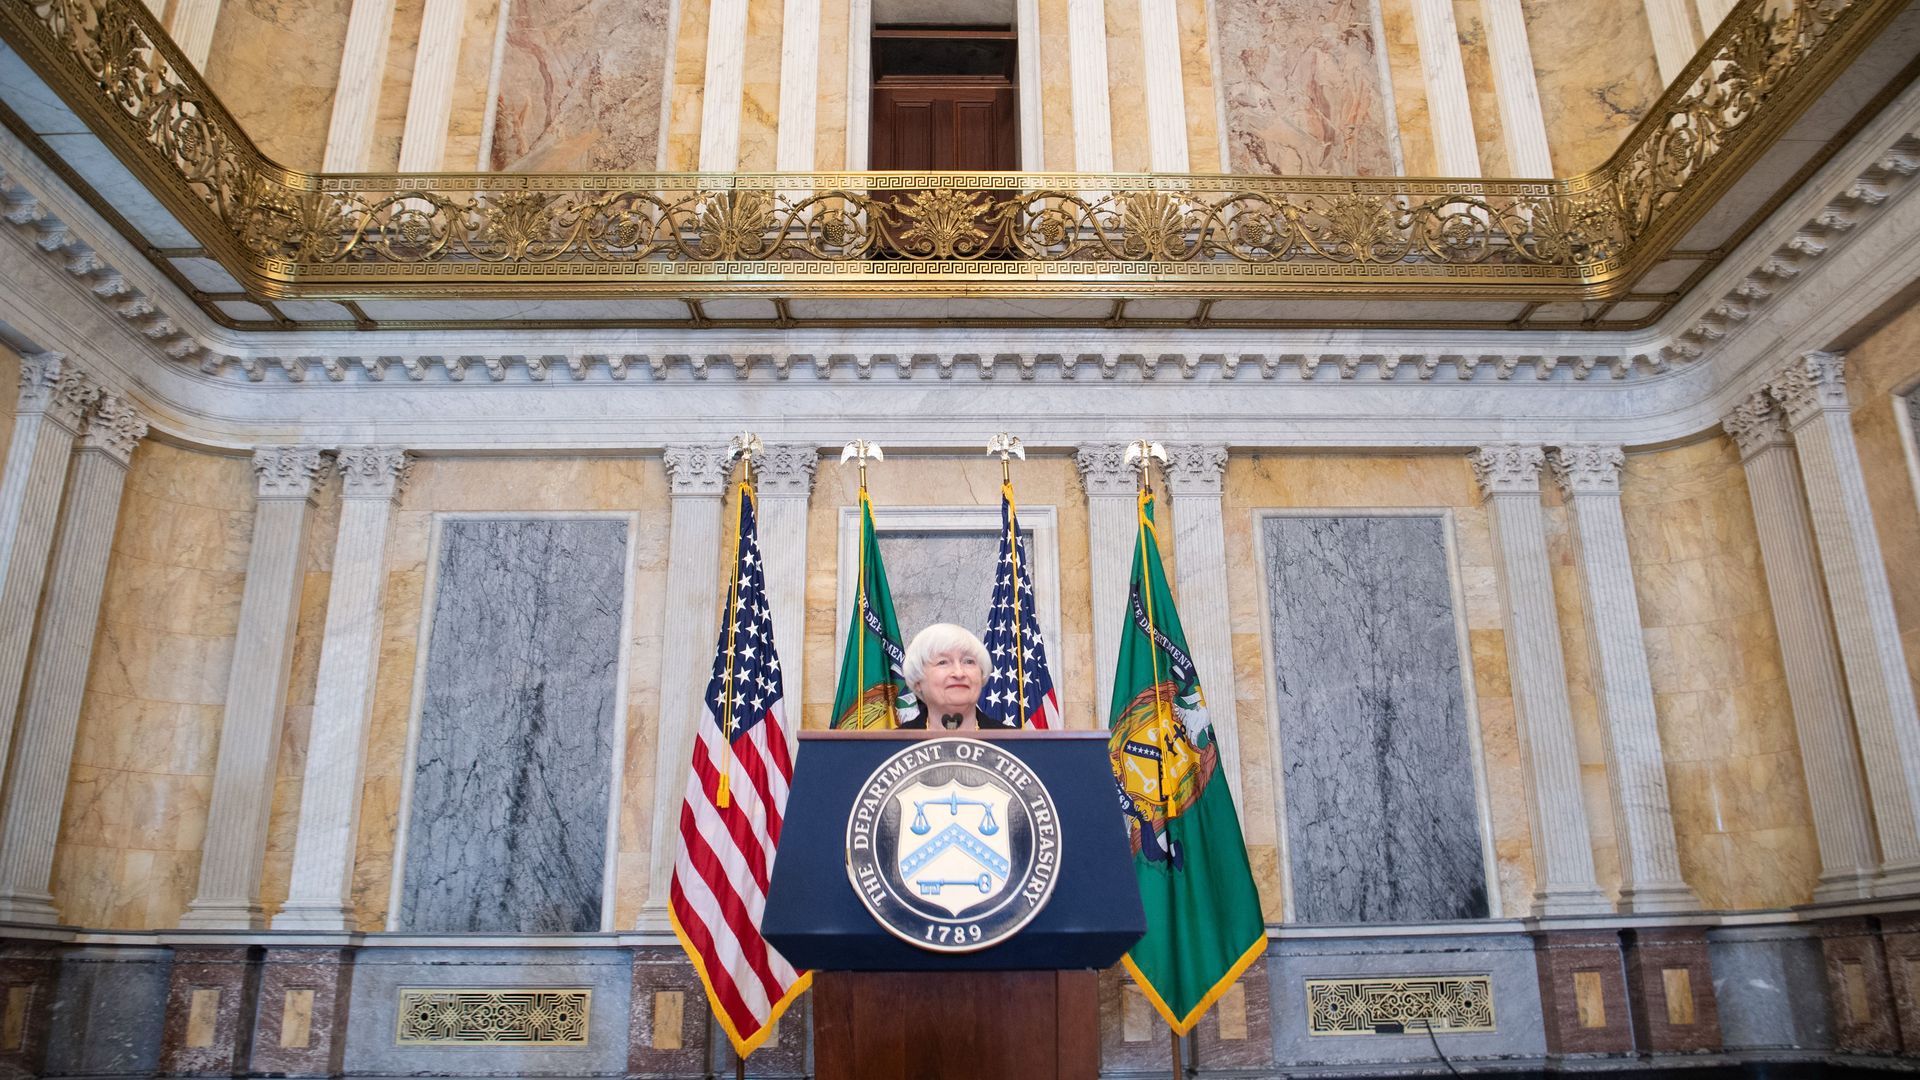 Treasury Secretary Janet Yellen is seen speaking in an ornate room during the IMF Spring meetings in Washington.